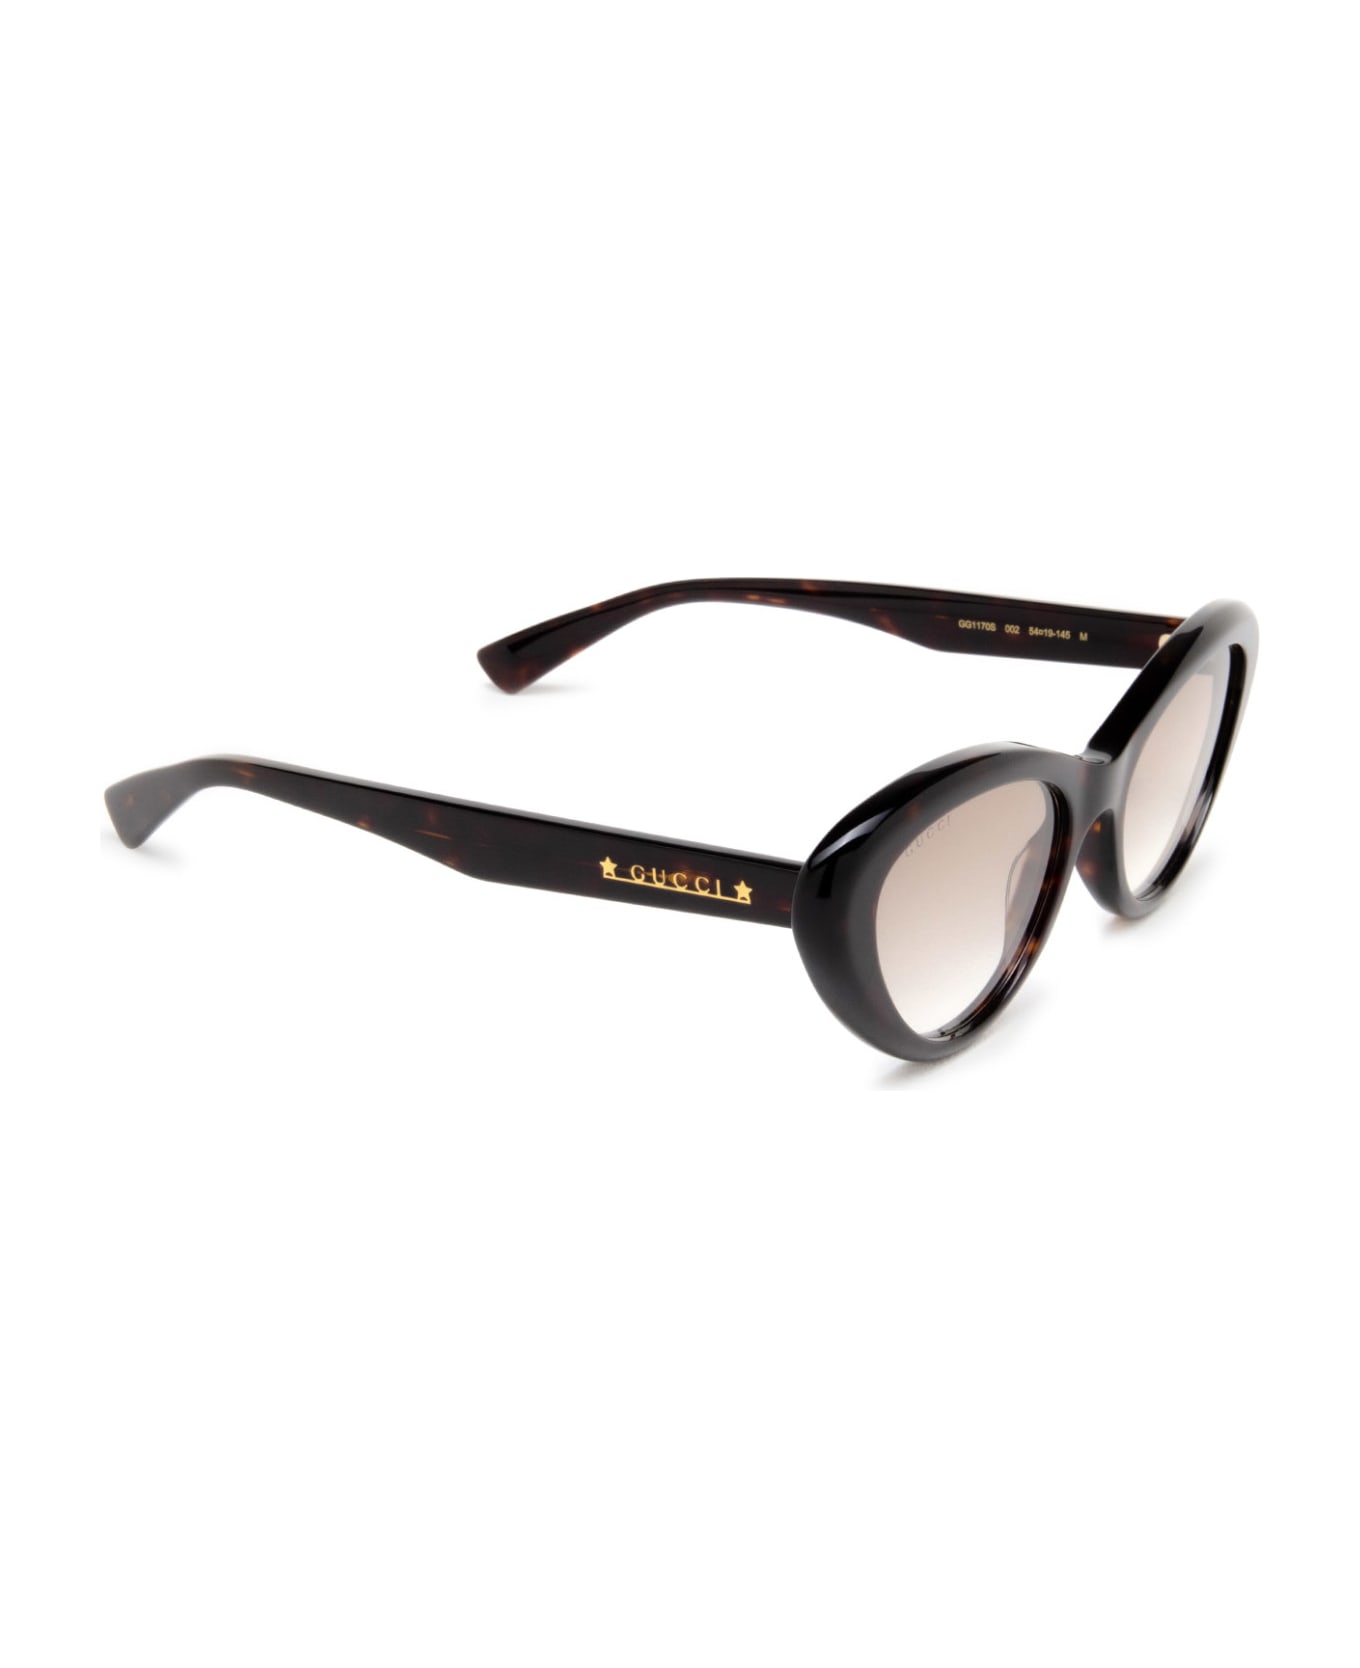 Gucci Eyewear Gg1170s Havana Sunglasses - Havana